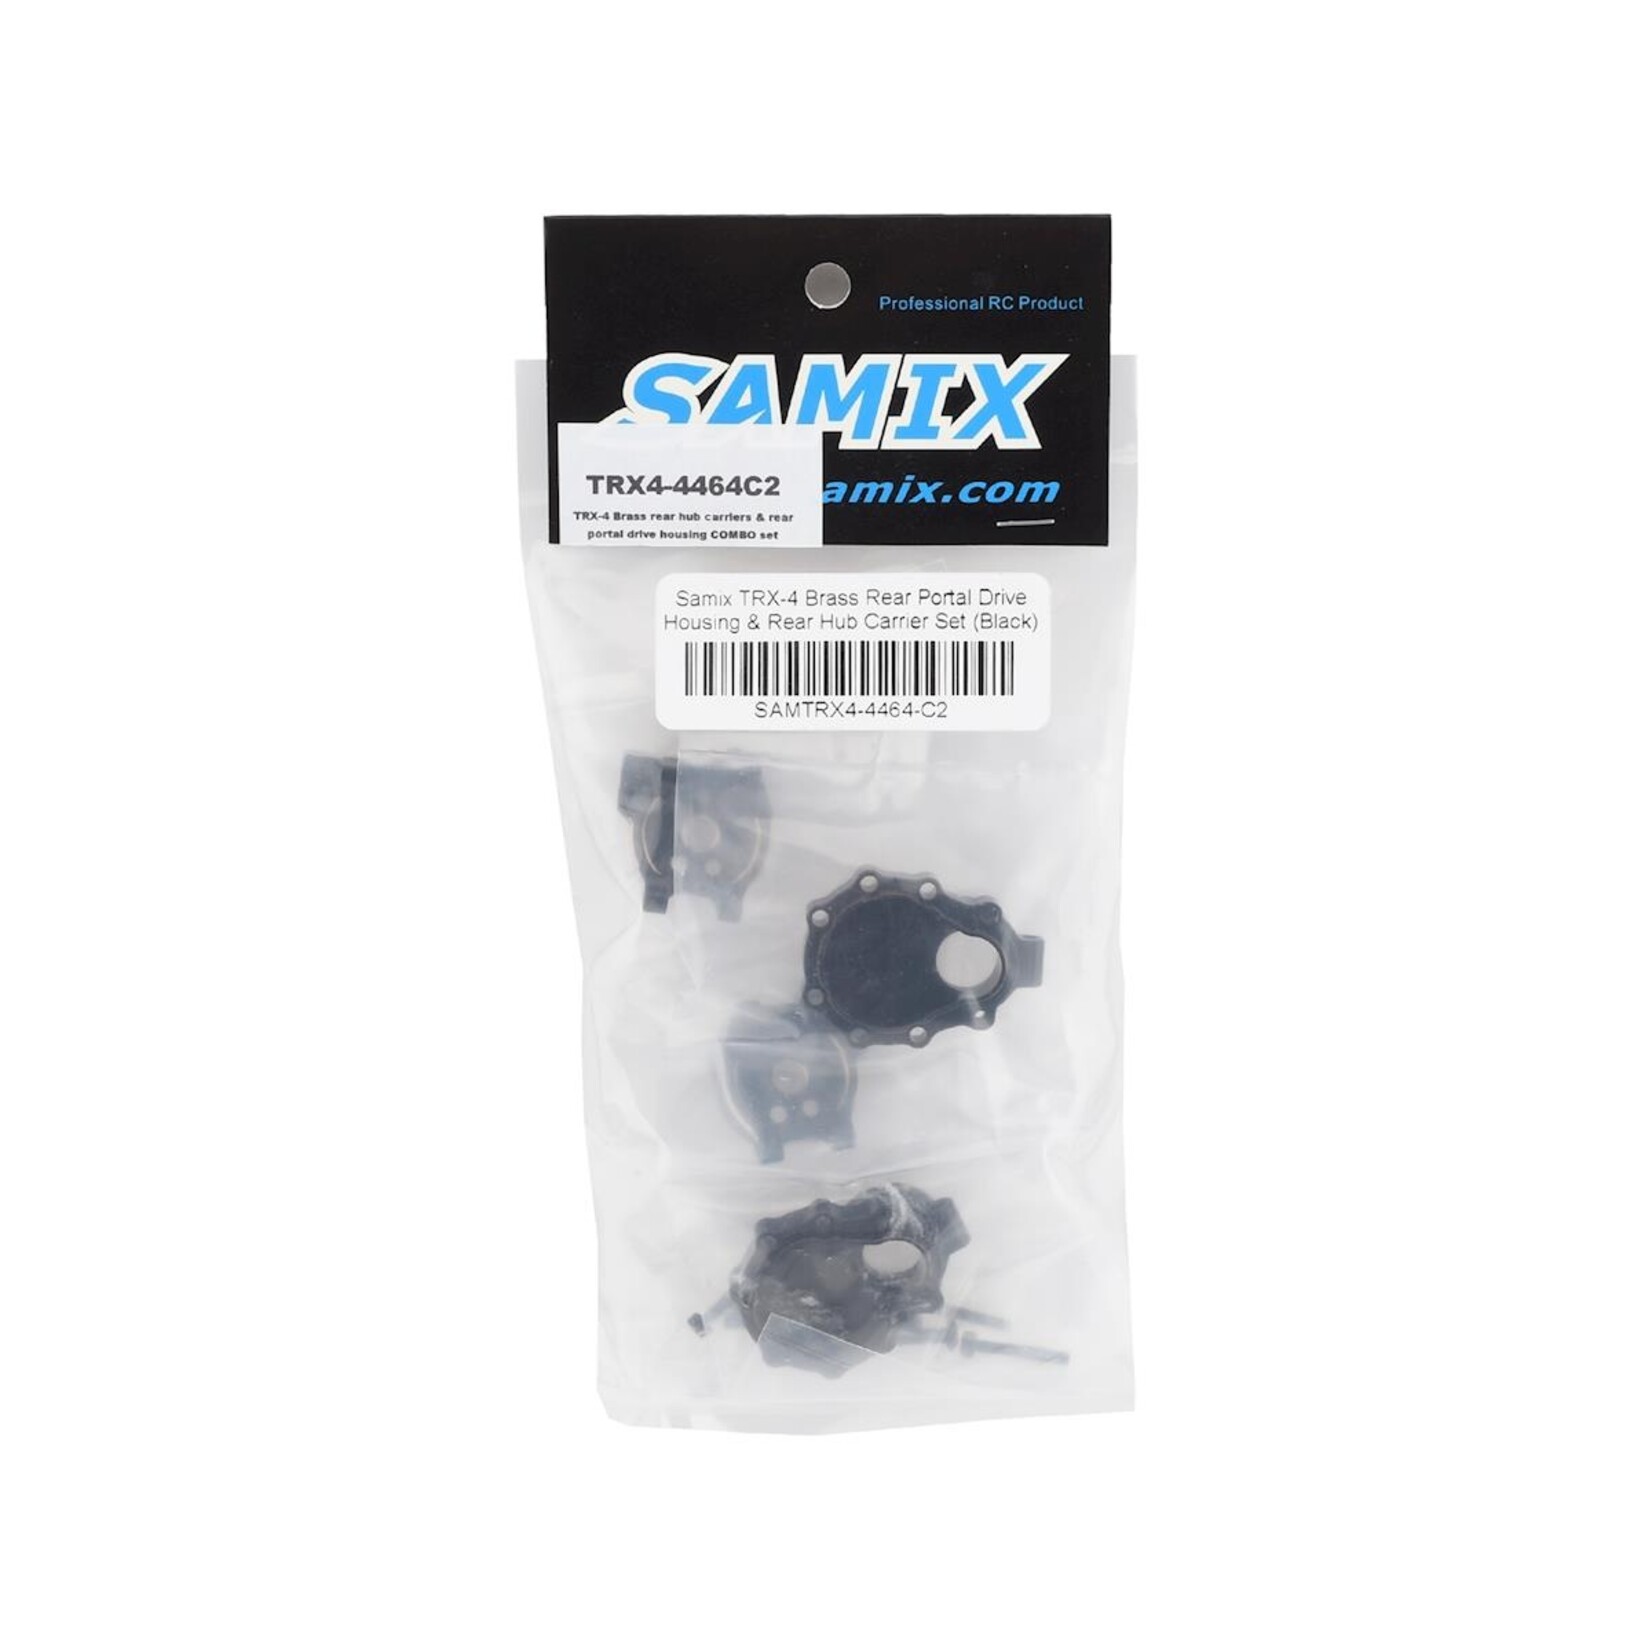 Samix Samix TRX-4 Brass Rear Portal Drive Housing & Rear Hub Carrier Set (Black) #TRX4-4464-C2